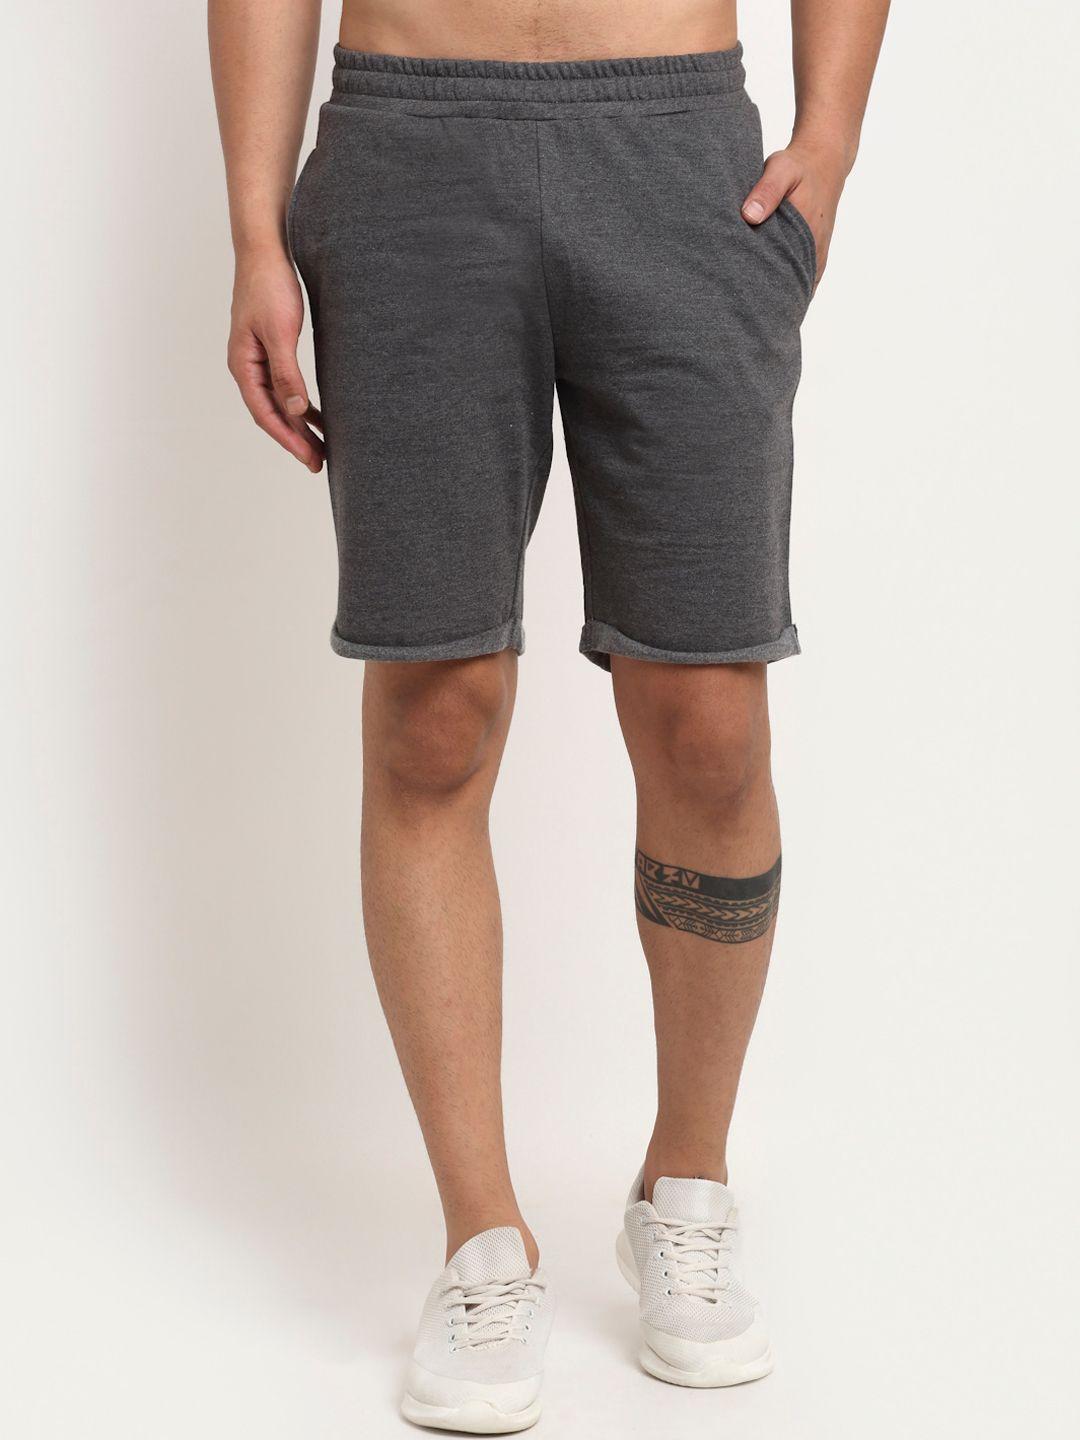 door74 men charcoal grey loose fit cotton shorts